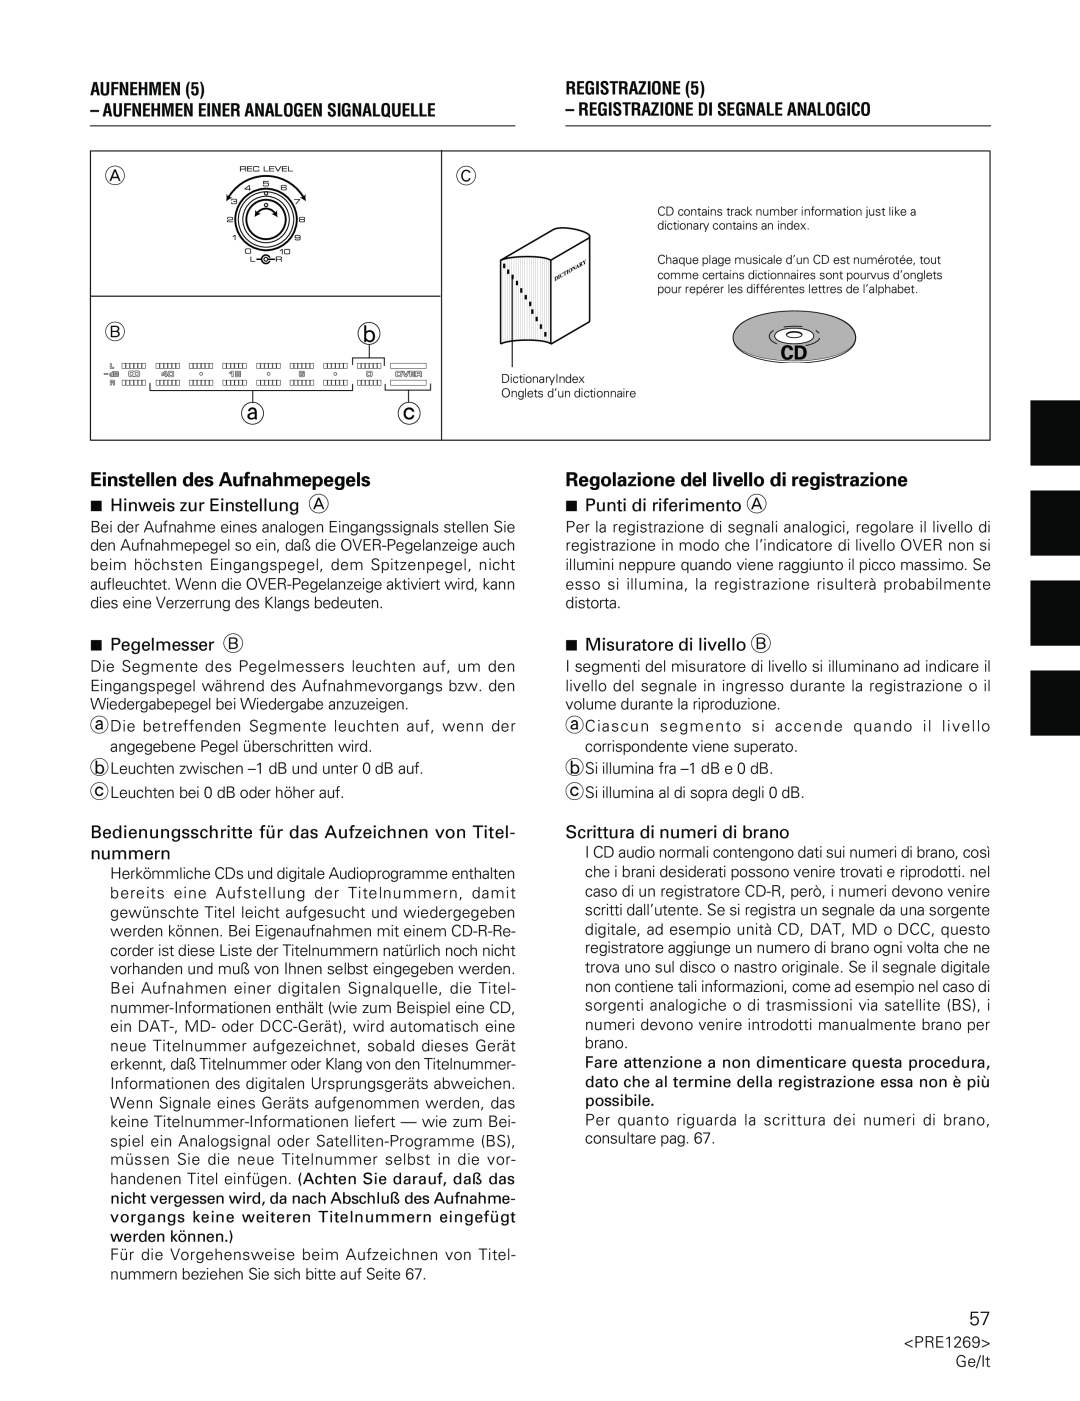 Pioneer PDR-555RW operating instructions Einstellen des Aufnahmepegels, Regolazione del livello di registrazione 